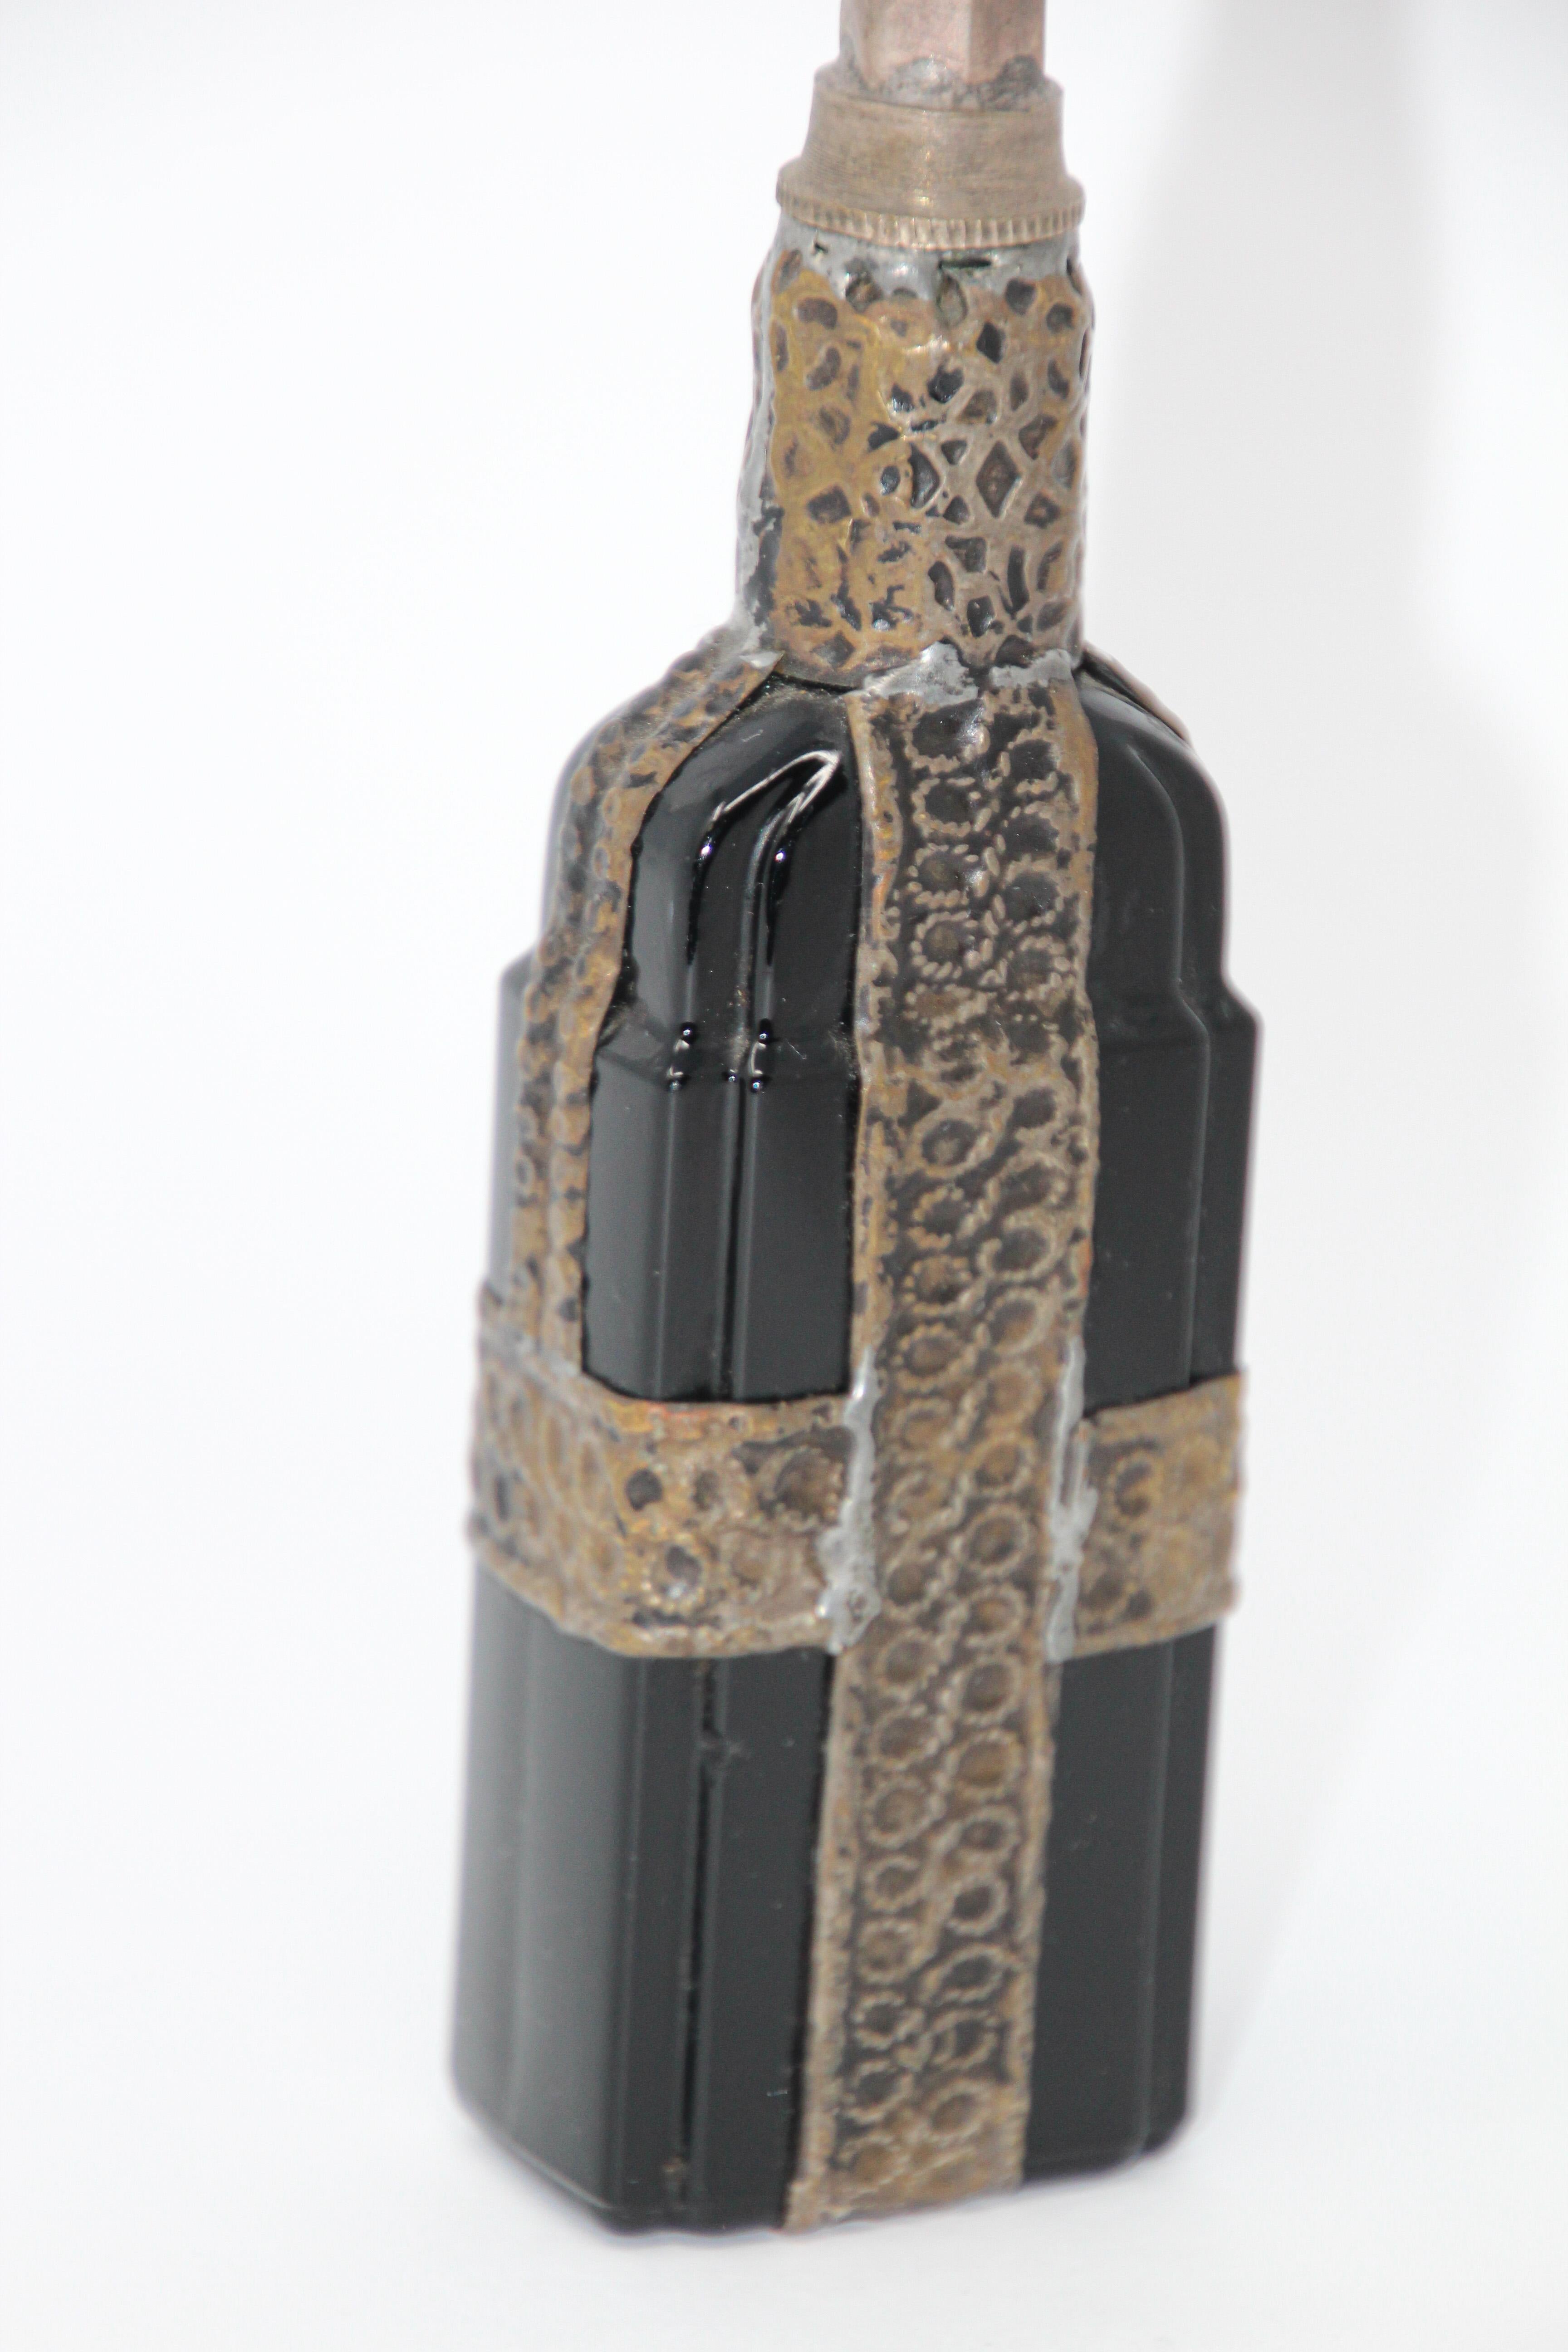 Moorish Moroccan Black Glass Perfume Bottle Sprinkler with Metal Overlay